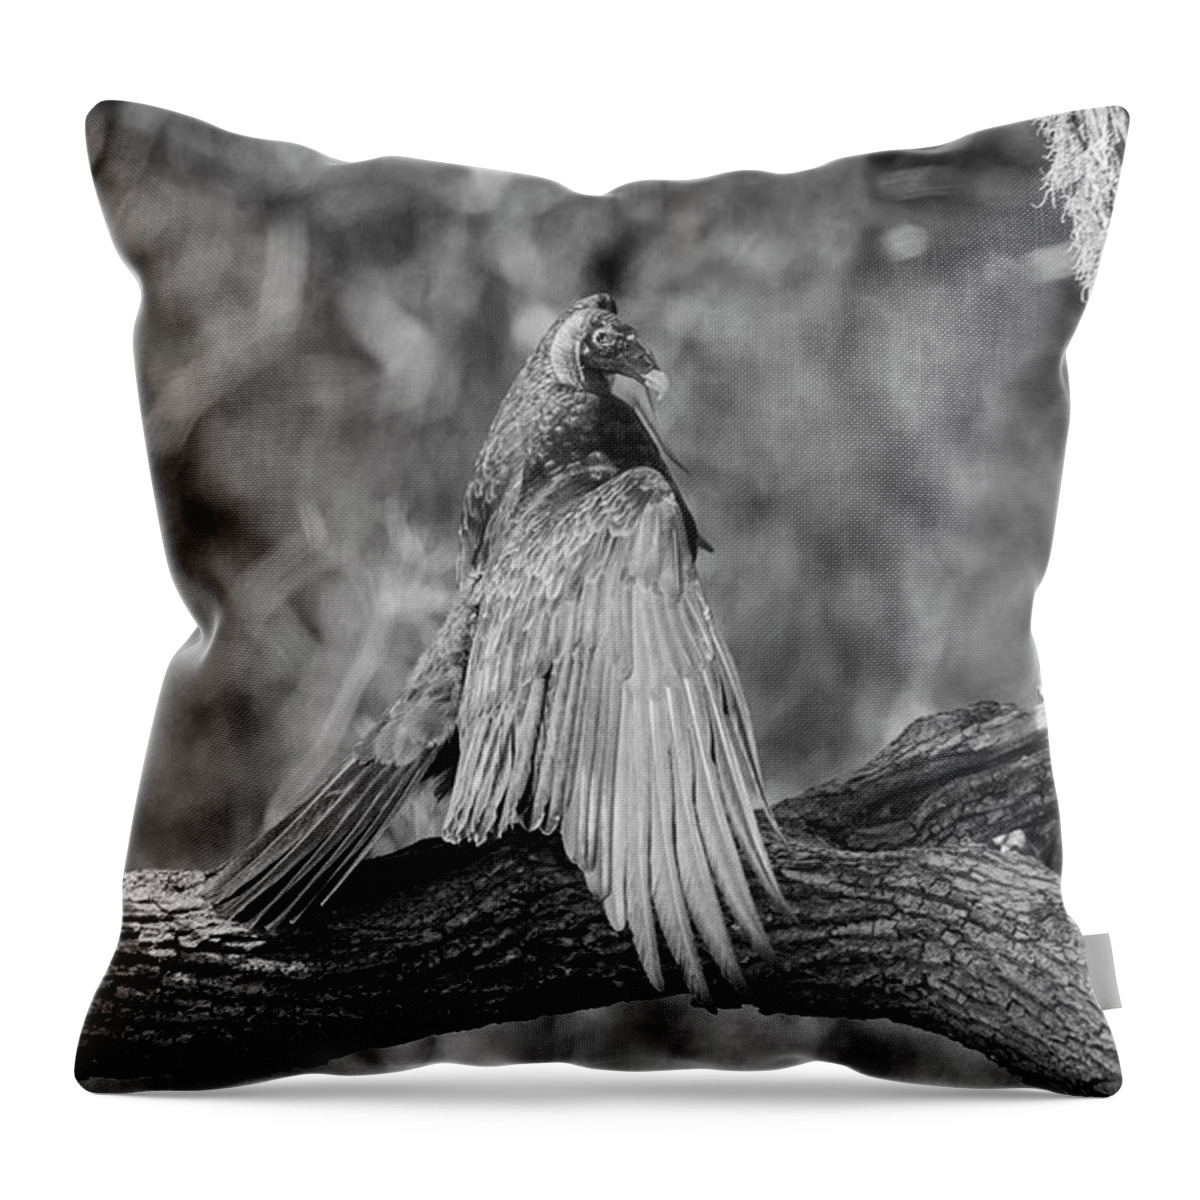 Turkey Vulture Throw Pillow featuring the photograph Soaking Up the Golden Rays by Puttaswamy Ravishankar